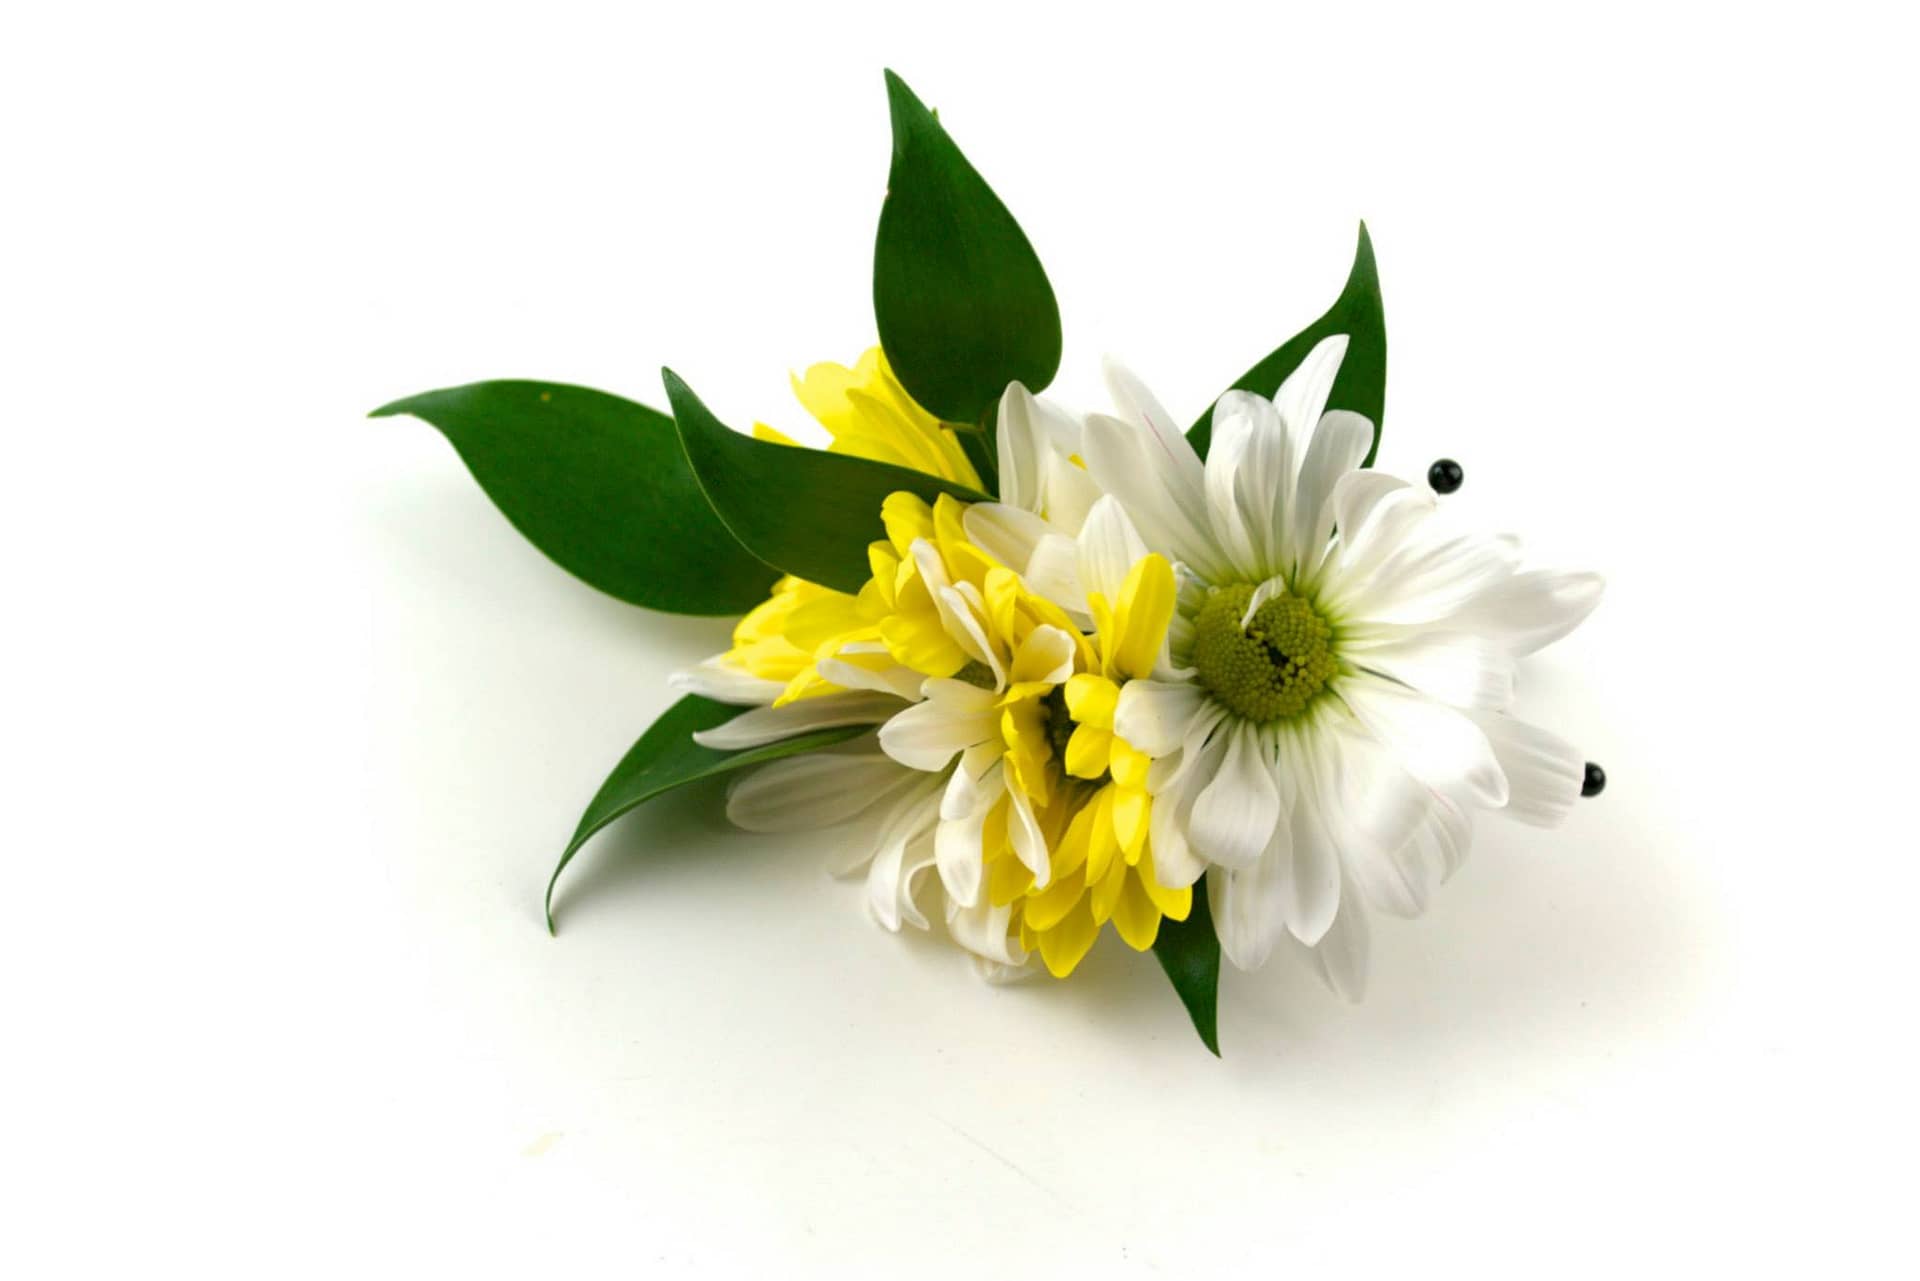 minneapolis-florist-wedding-daisies